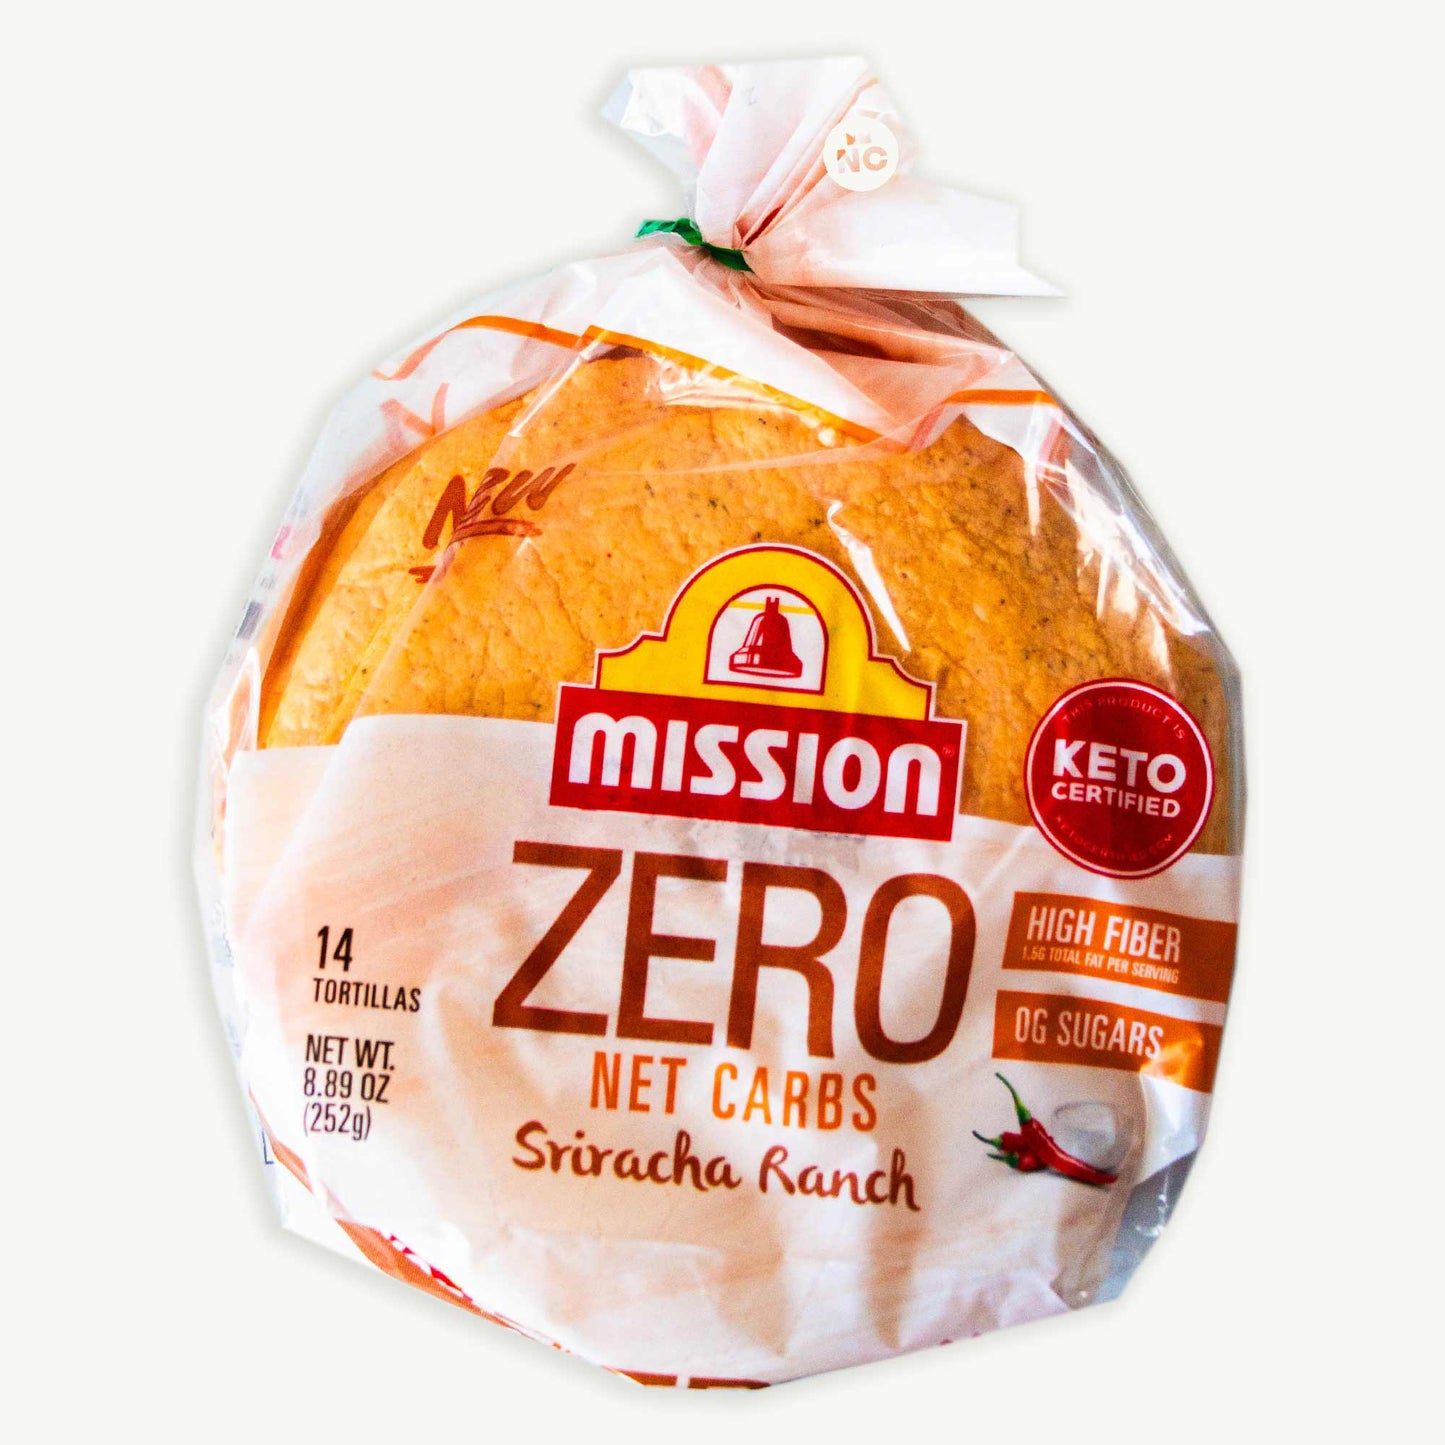 Mission Zero Net Carbs Sriracha Ranch Tortillas 14ct